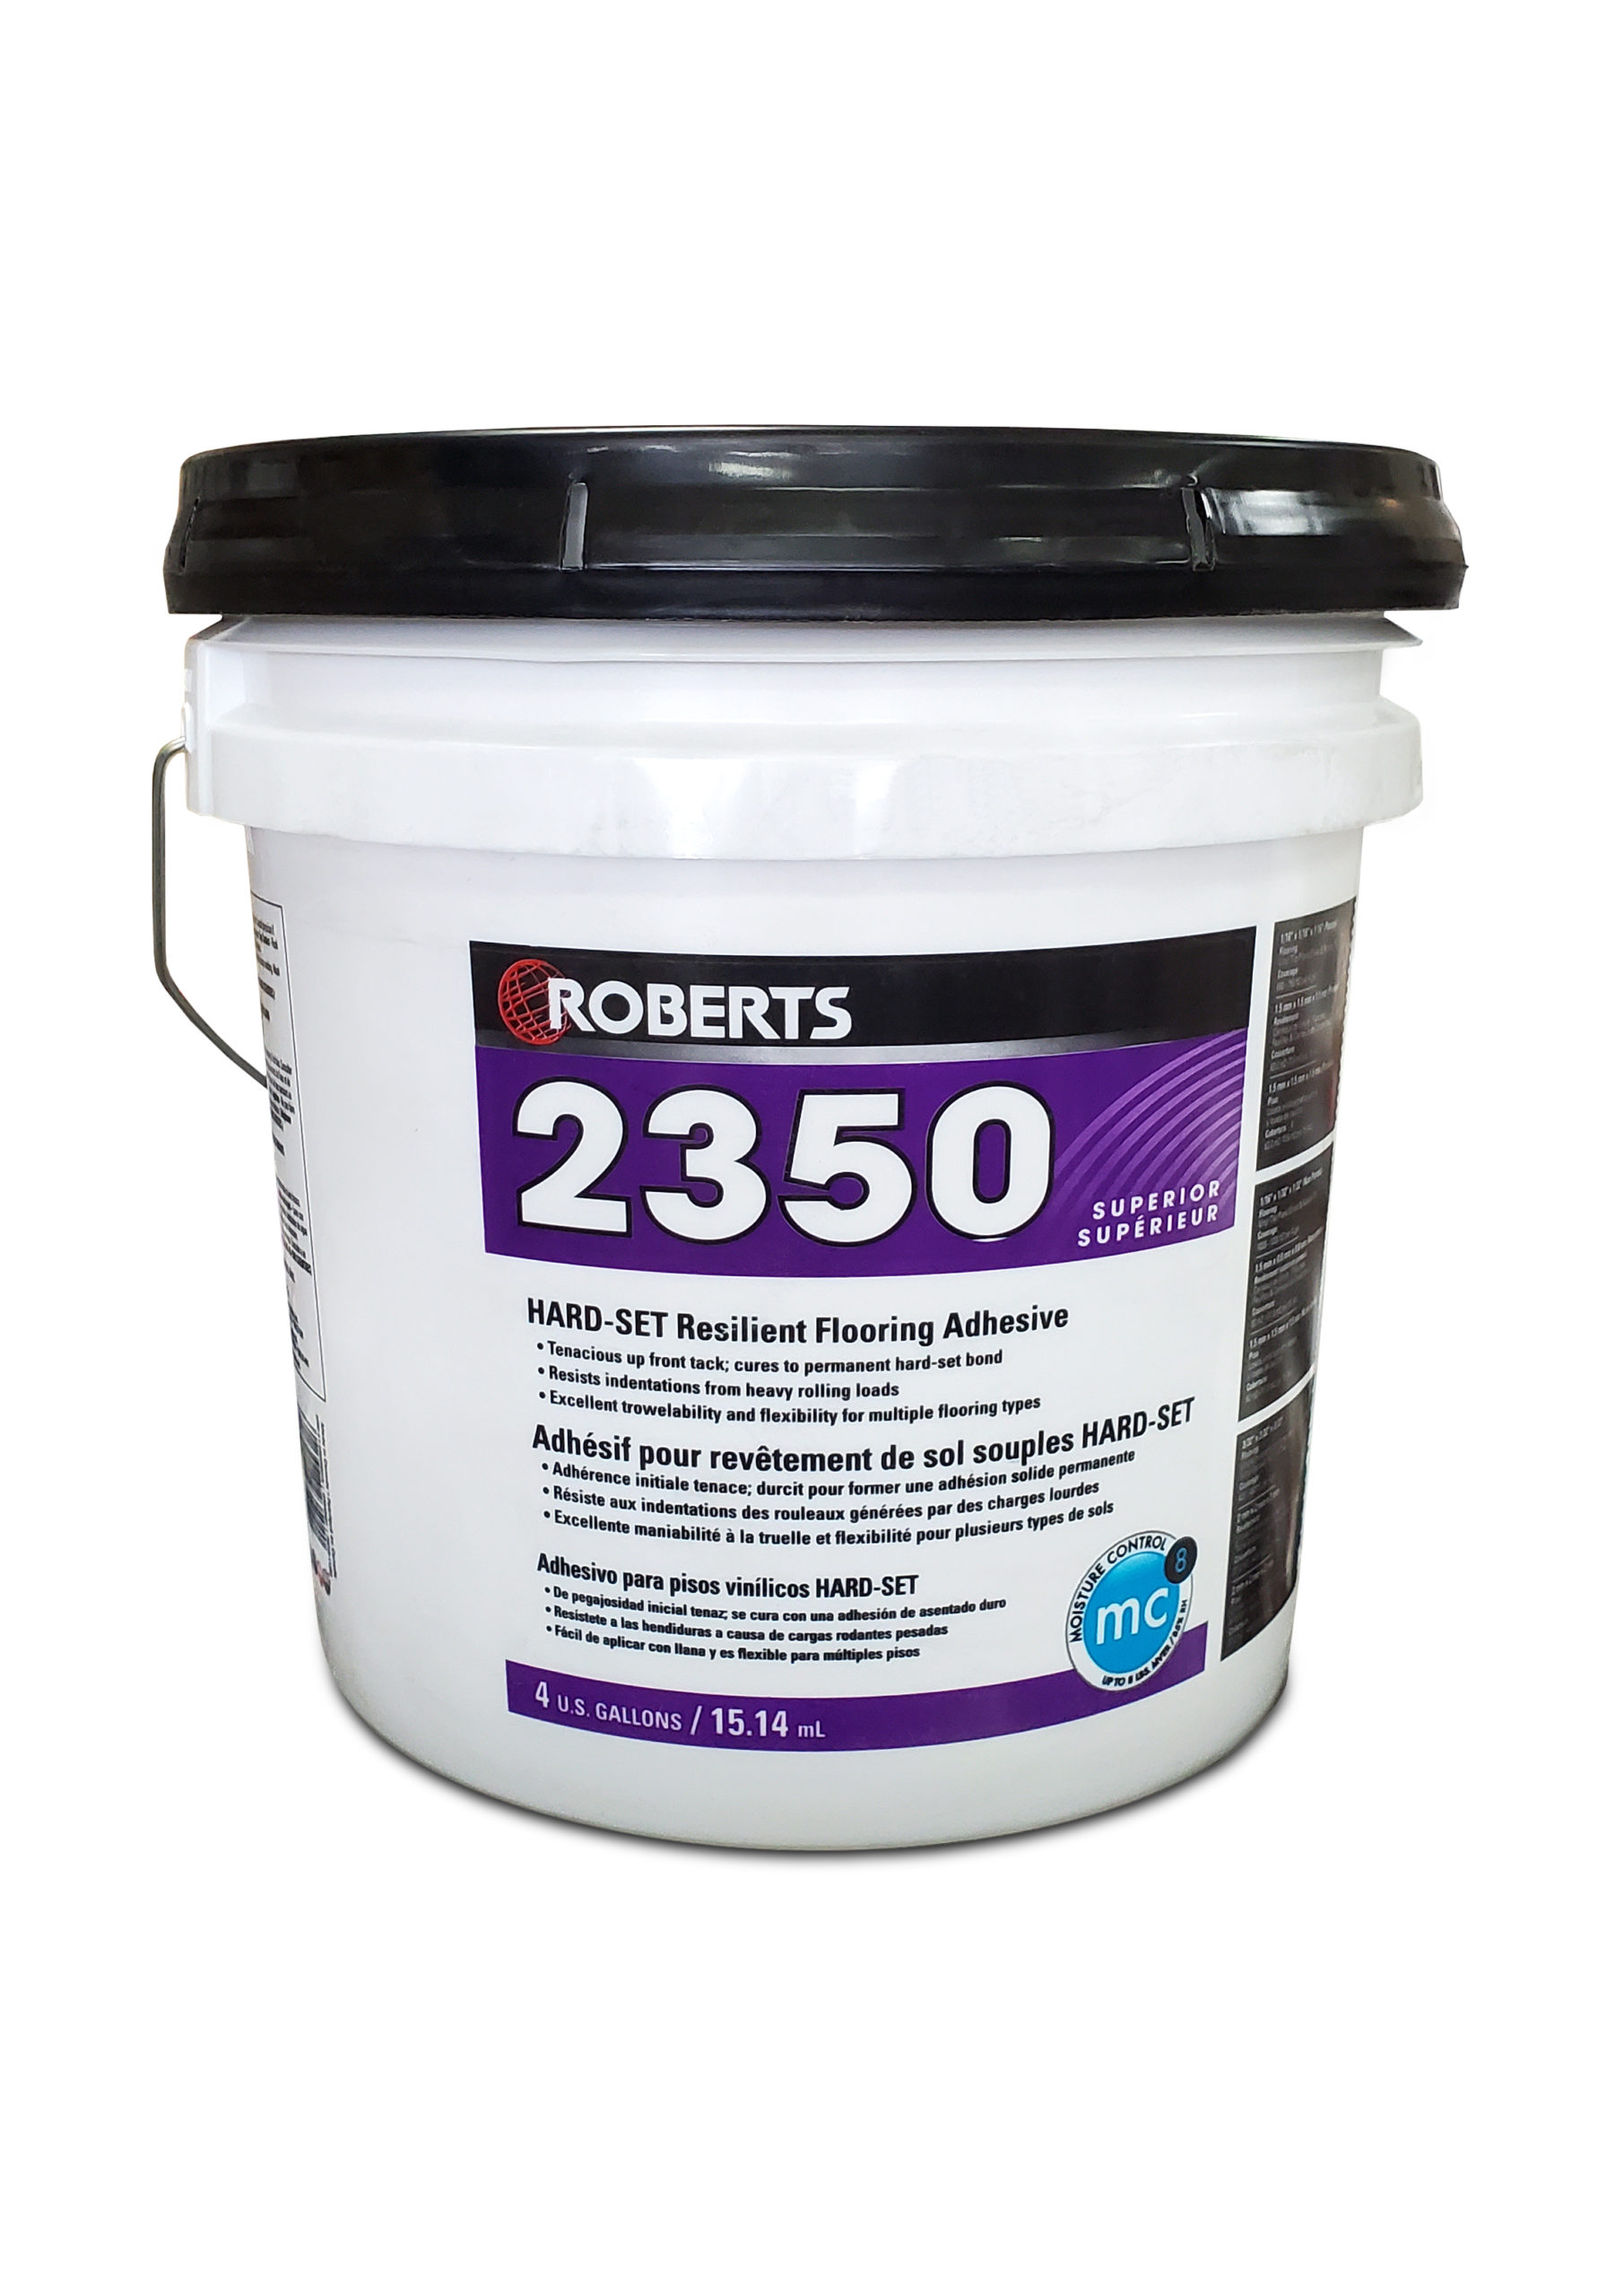 Hard-set Resilient Flooring Adhesive 2350_15.14L_4 Gal